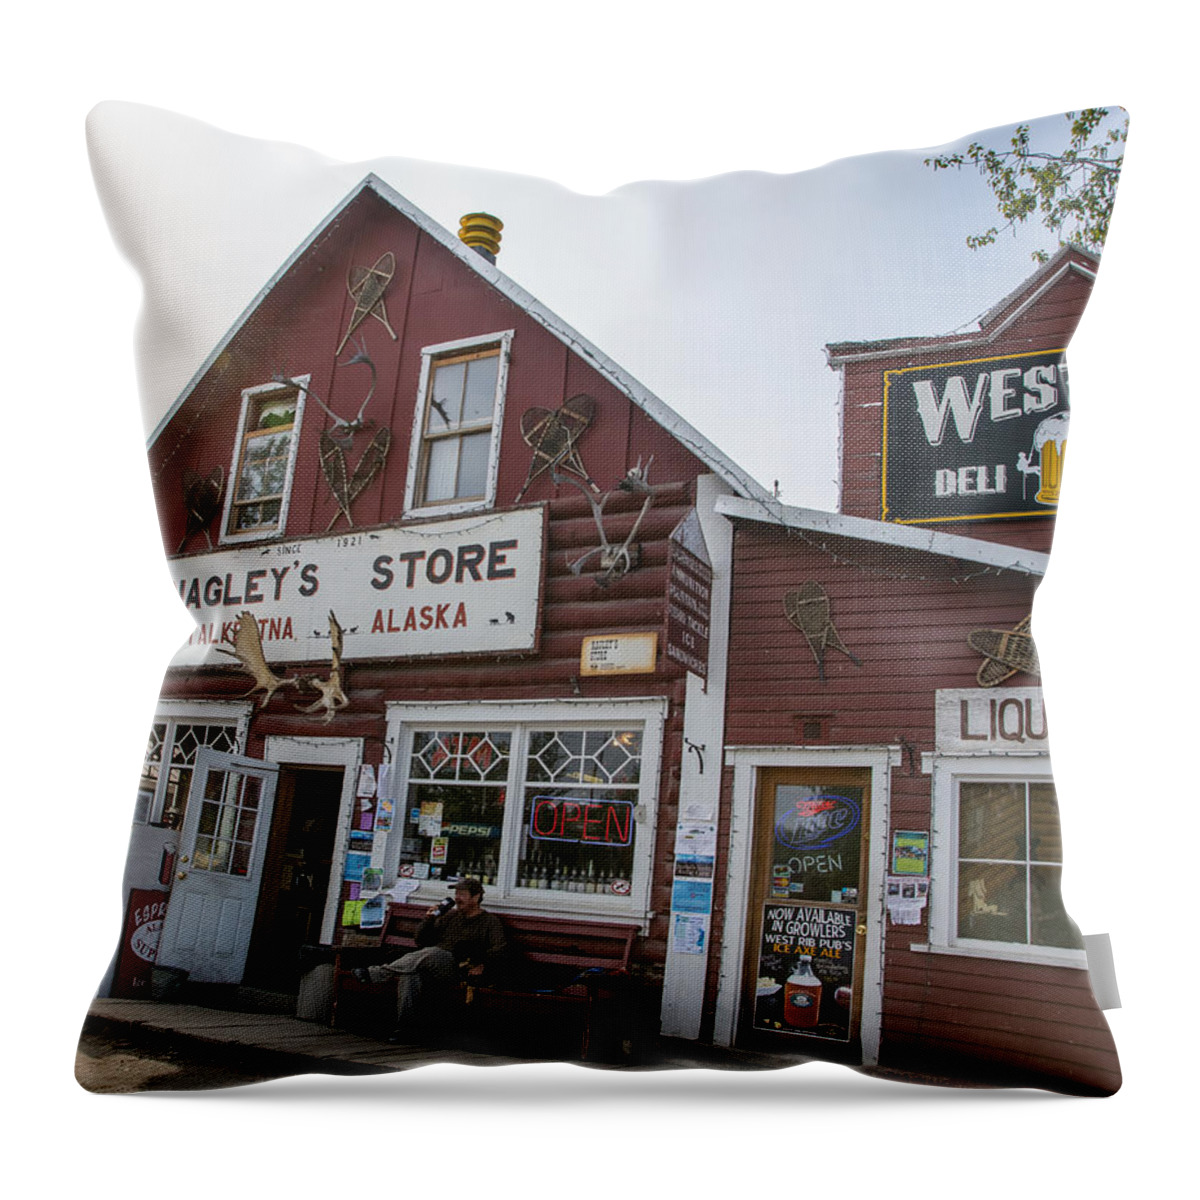 Nagleys Store Throw Pillow featuring the photograph Nagleys Store Talkeetna Alaska by Allan Levin